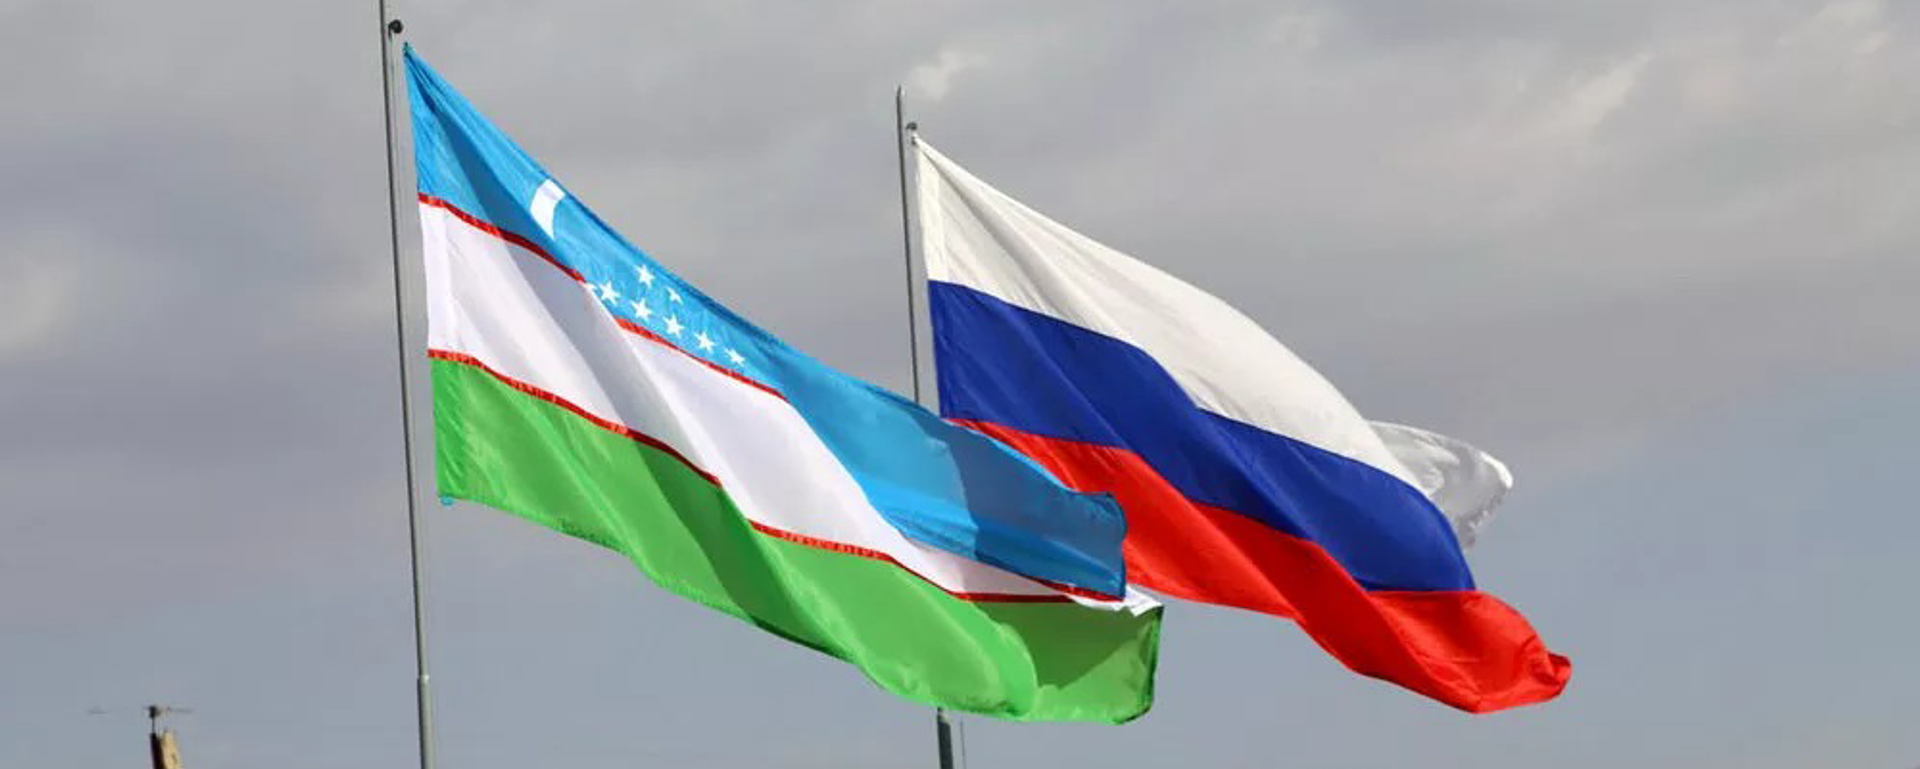 Флаги России и Узбекистана - Sputnik Узбекистан, 1920, 29.03.2021